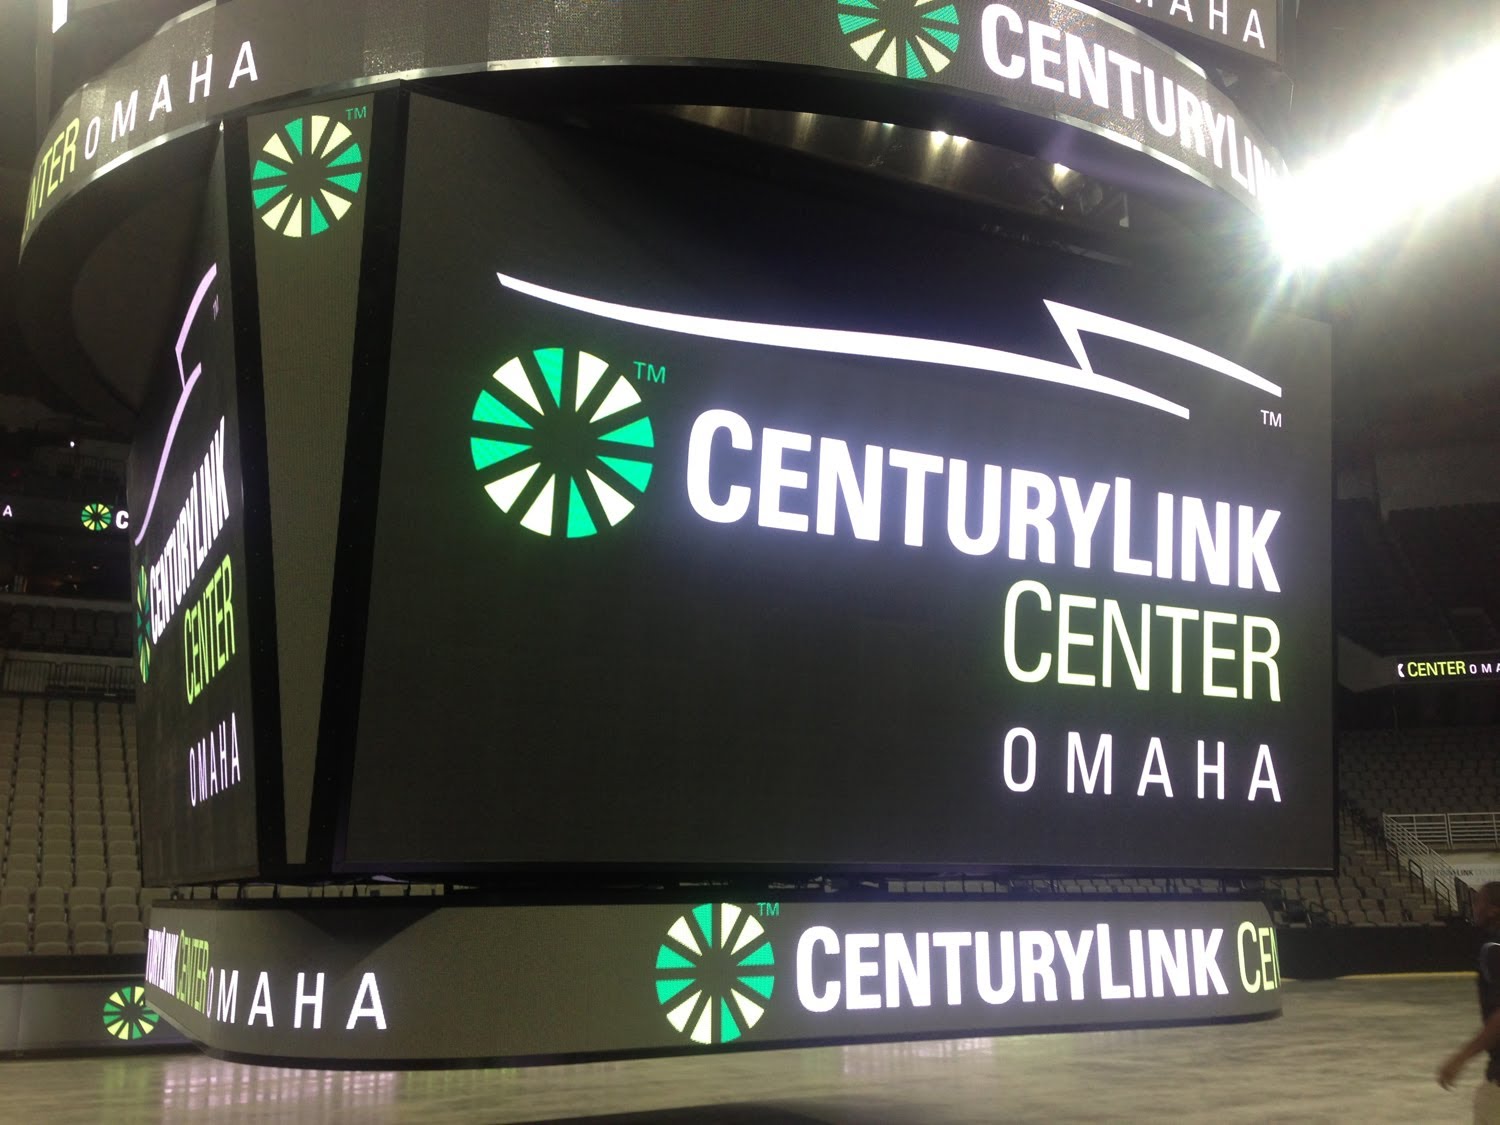 CenturyLink Solution Center's Logo